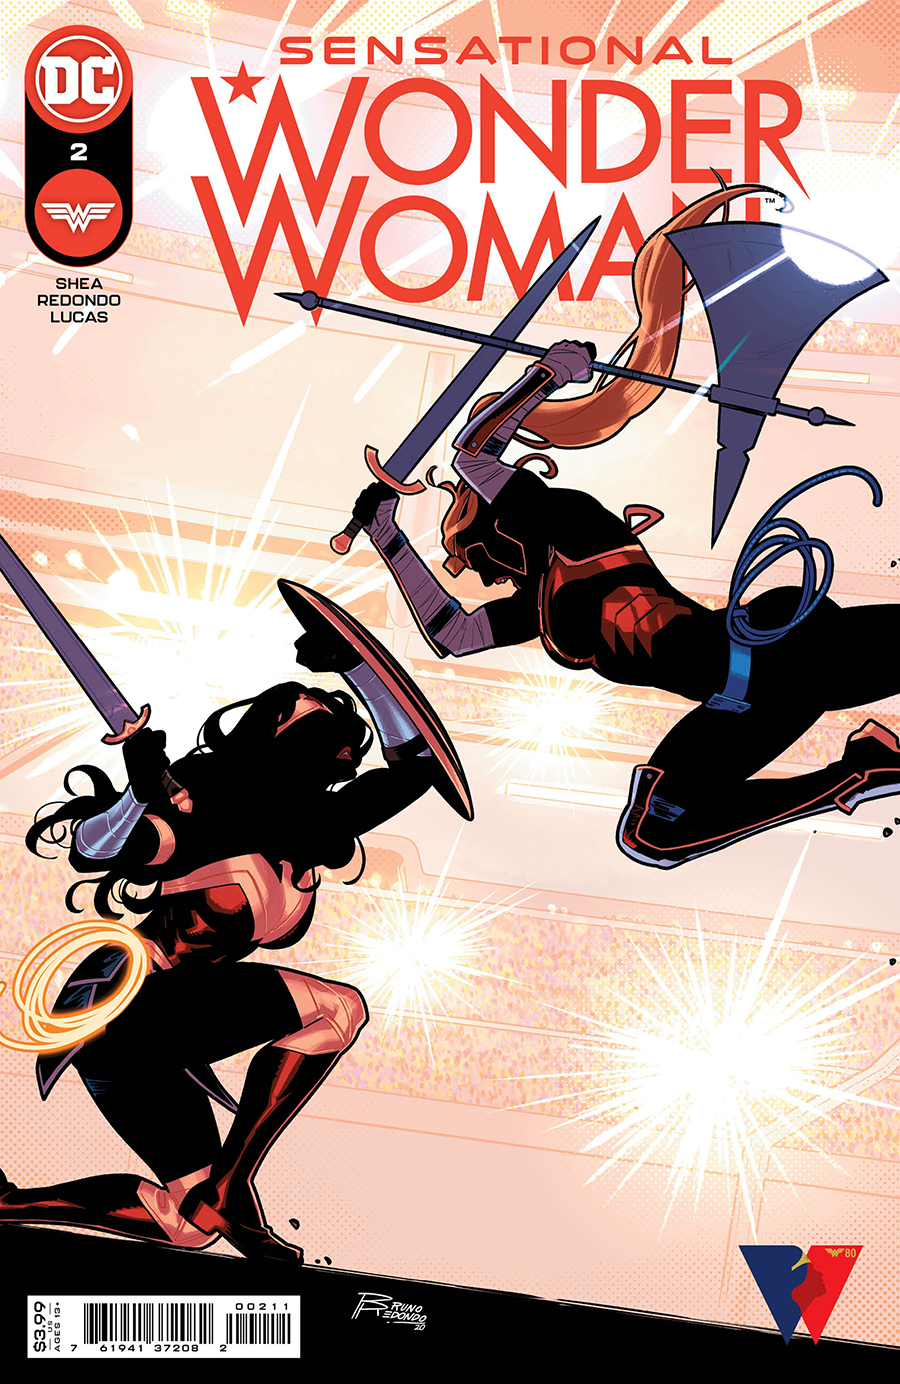 Sensational Wonder Woman #2 Cover A Bruno Redondo